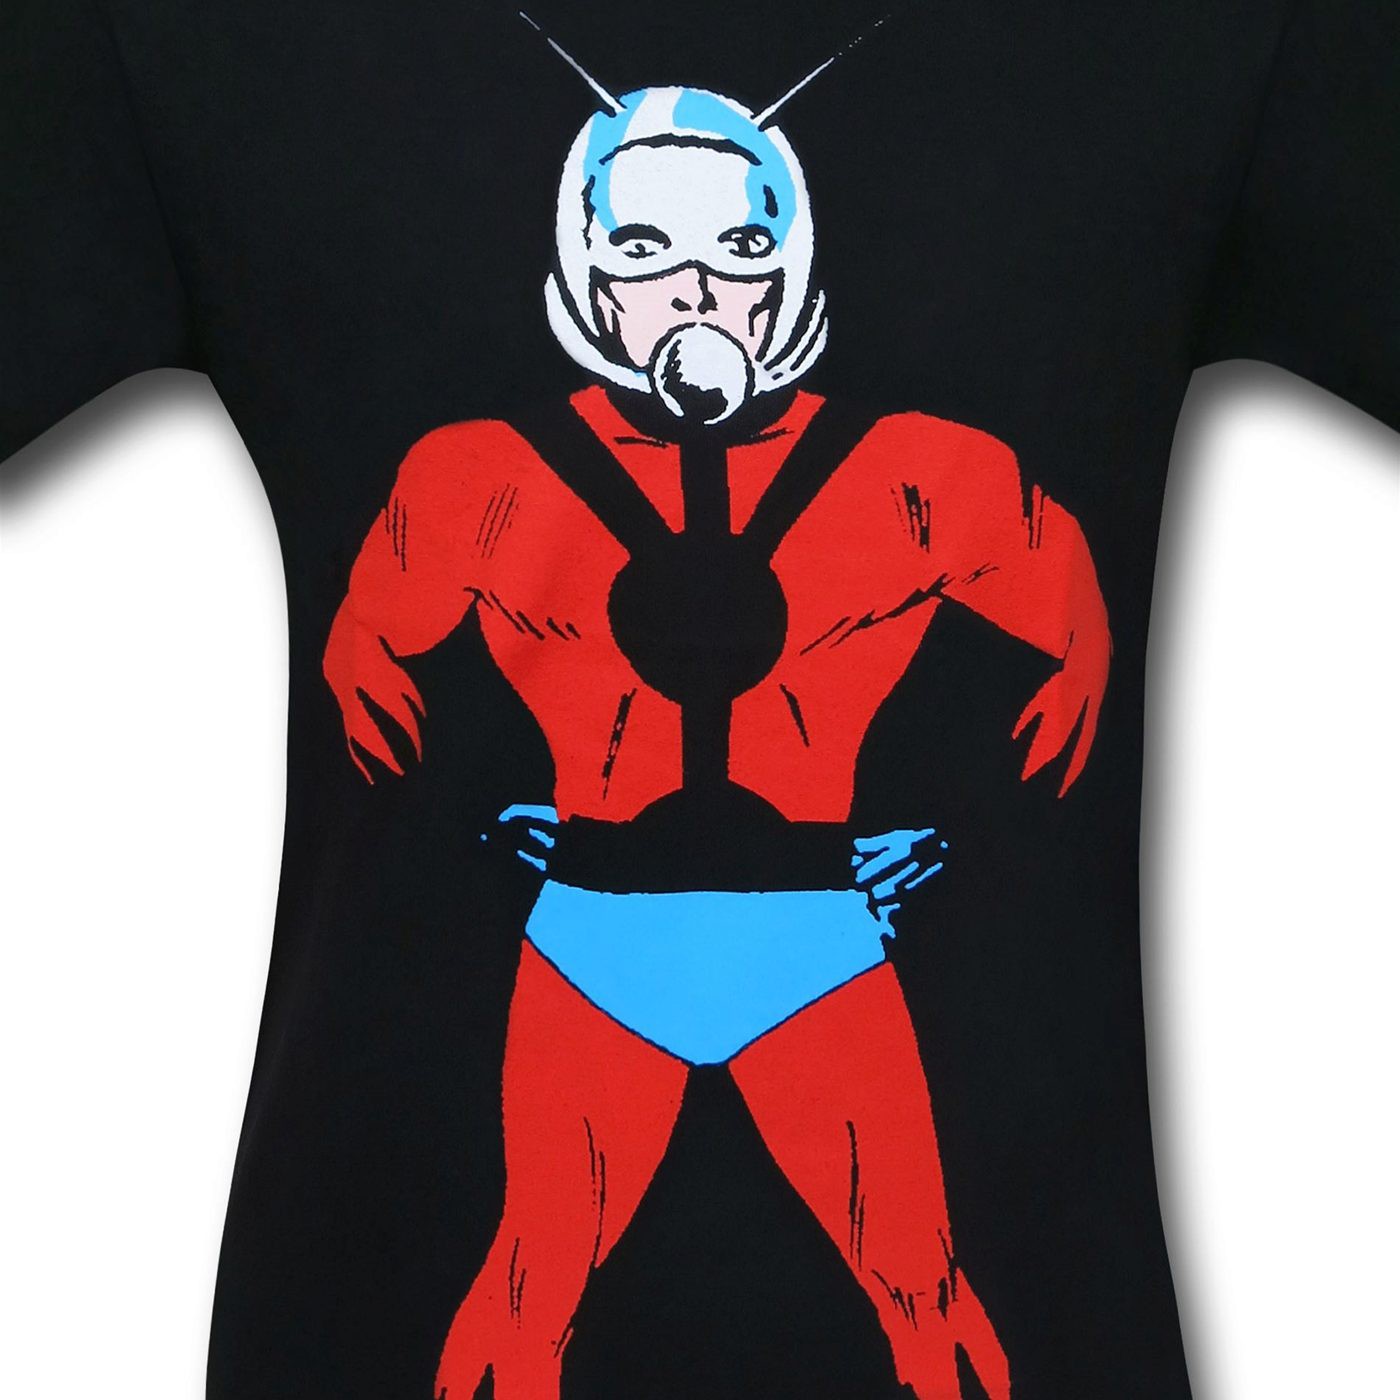 Ant-Man Full Size T-Shirt